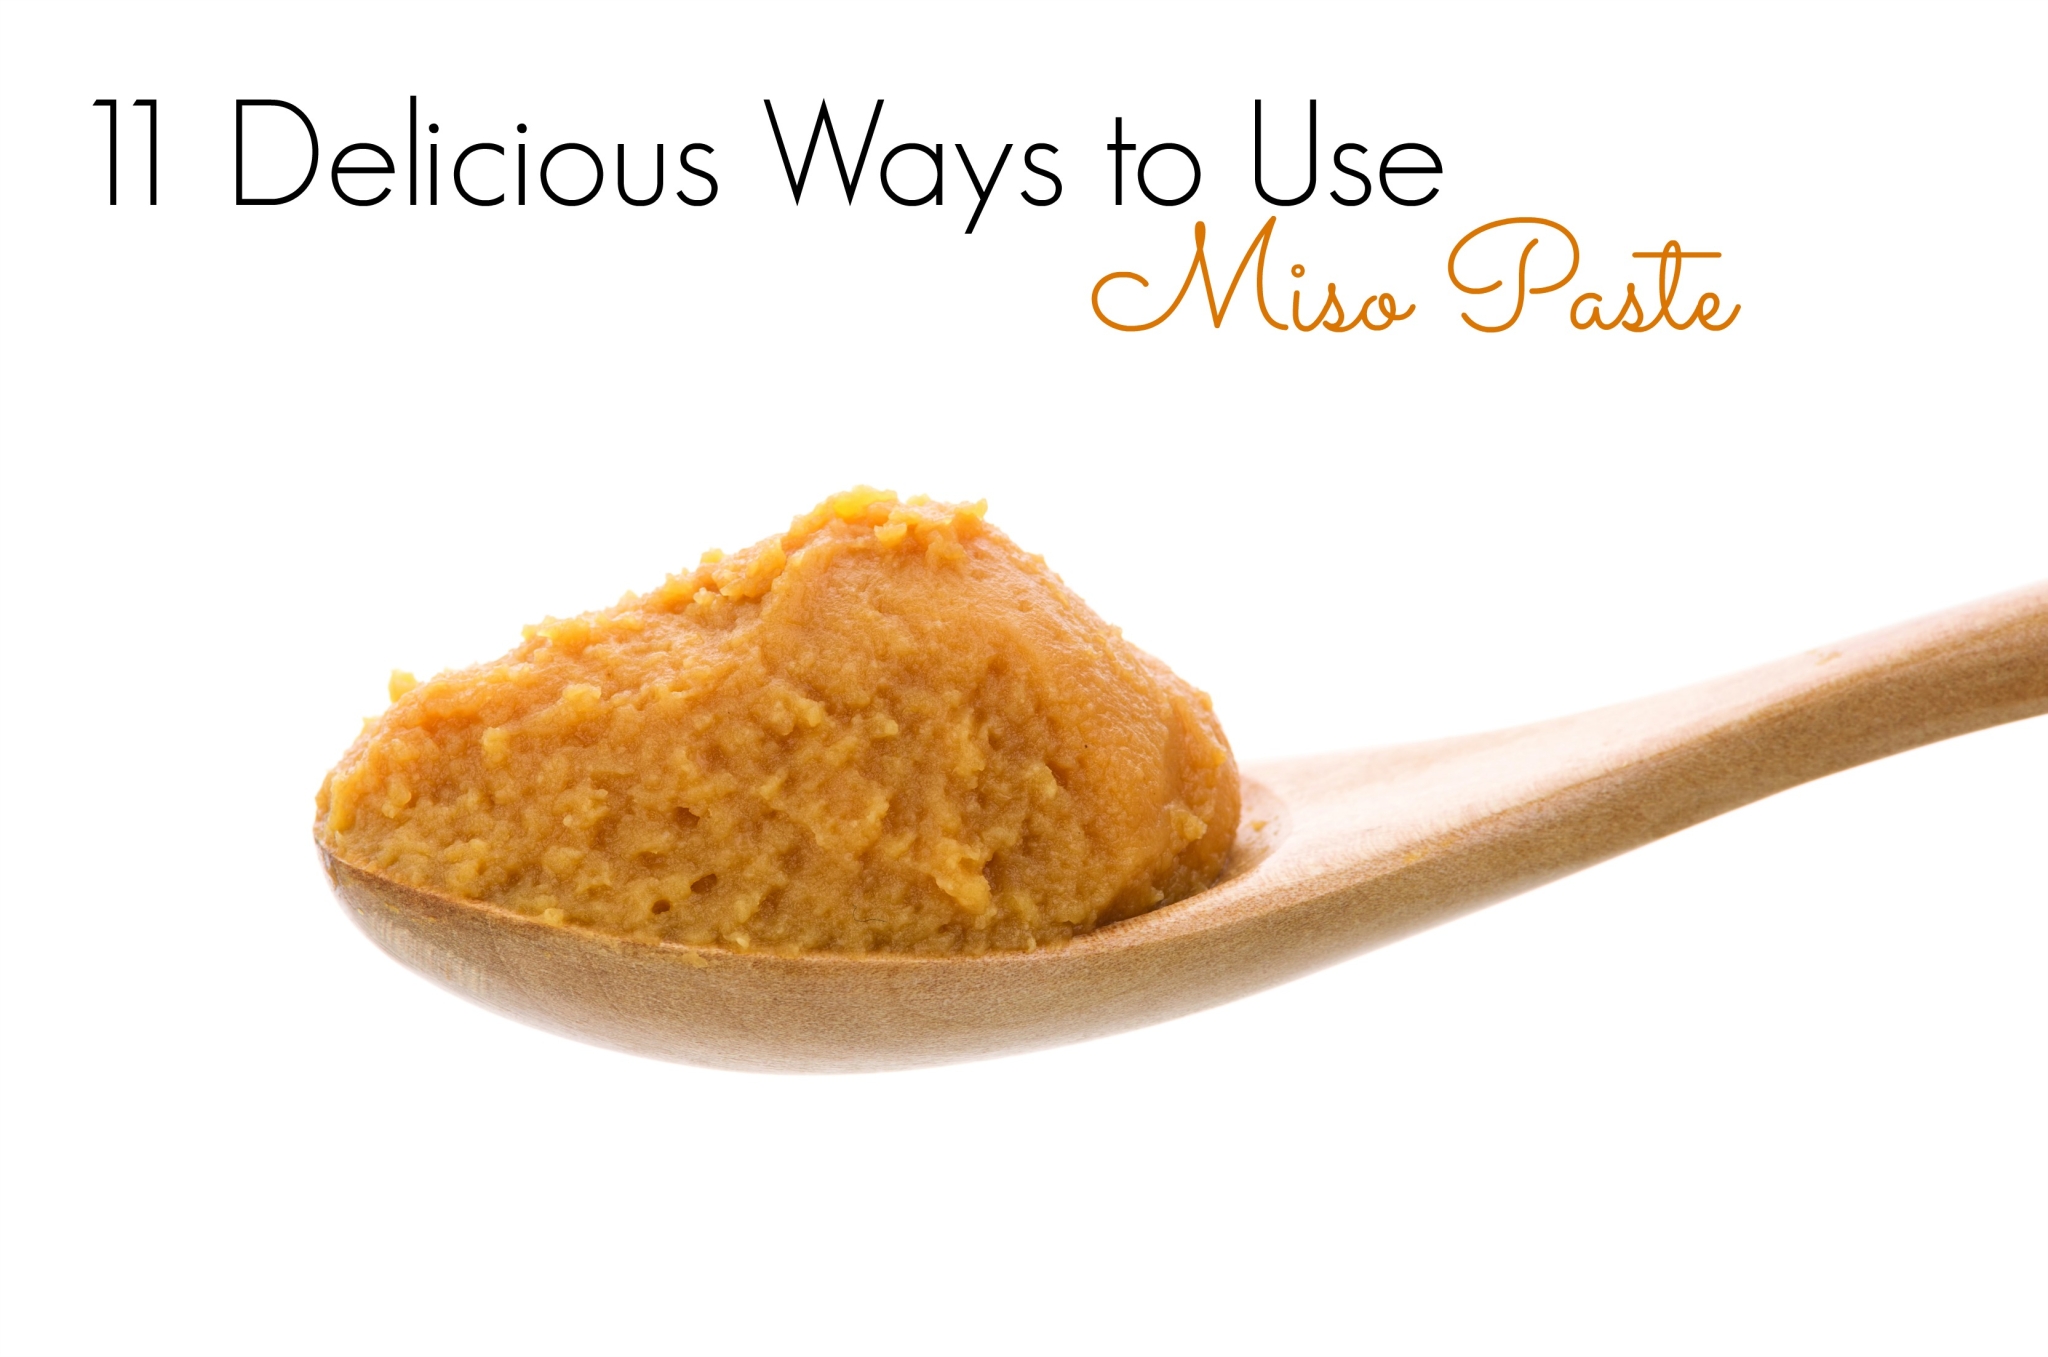 11 Delicious ways to use miso paste